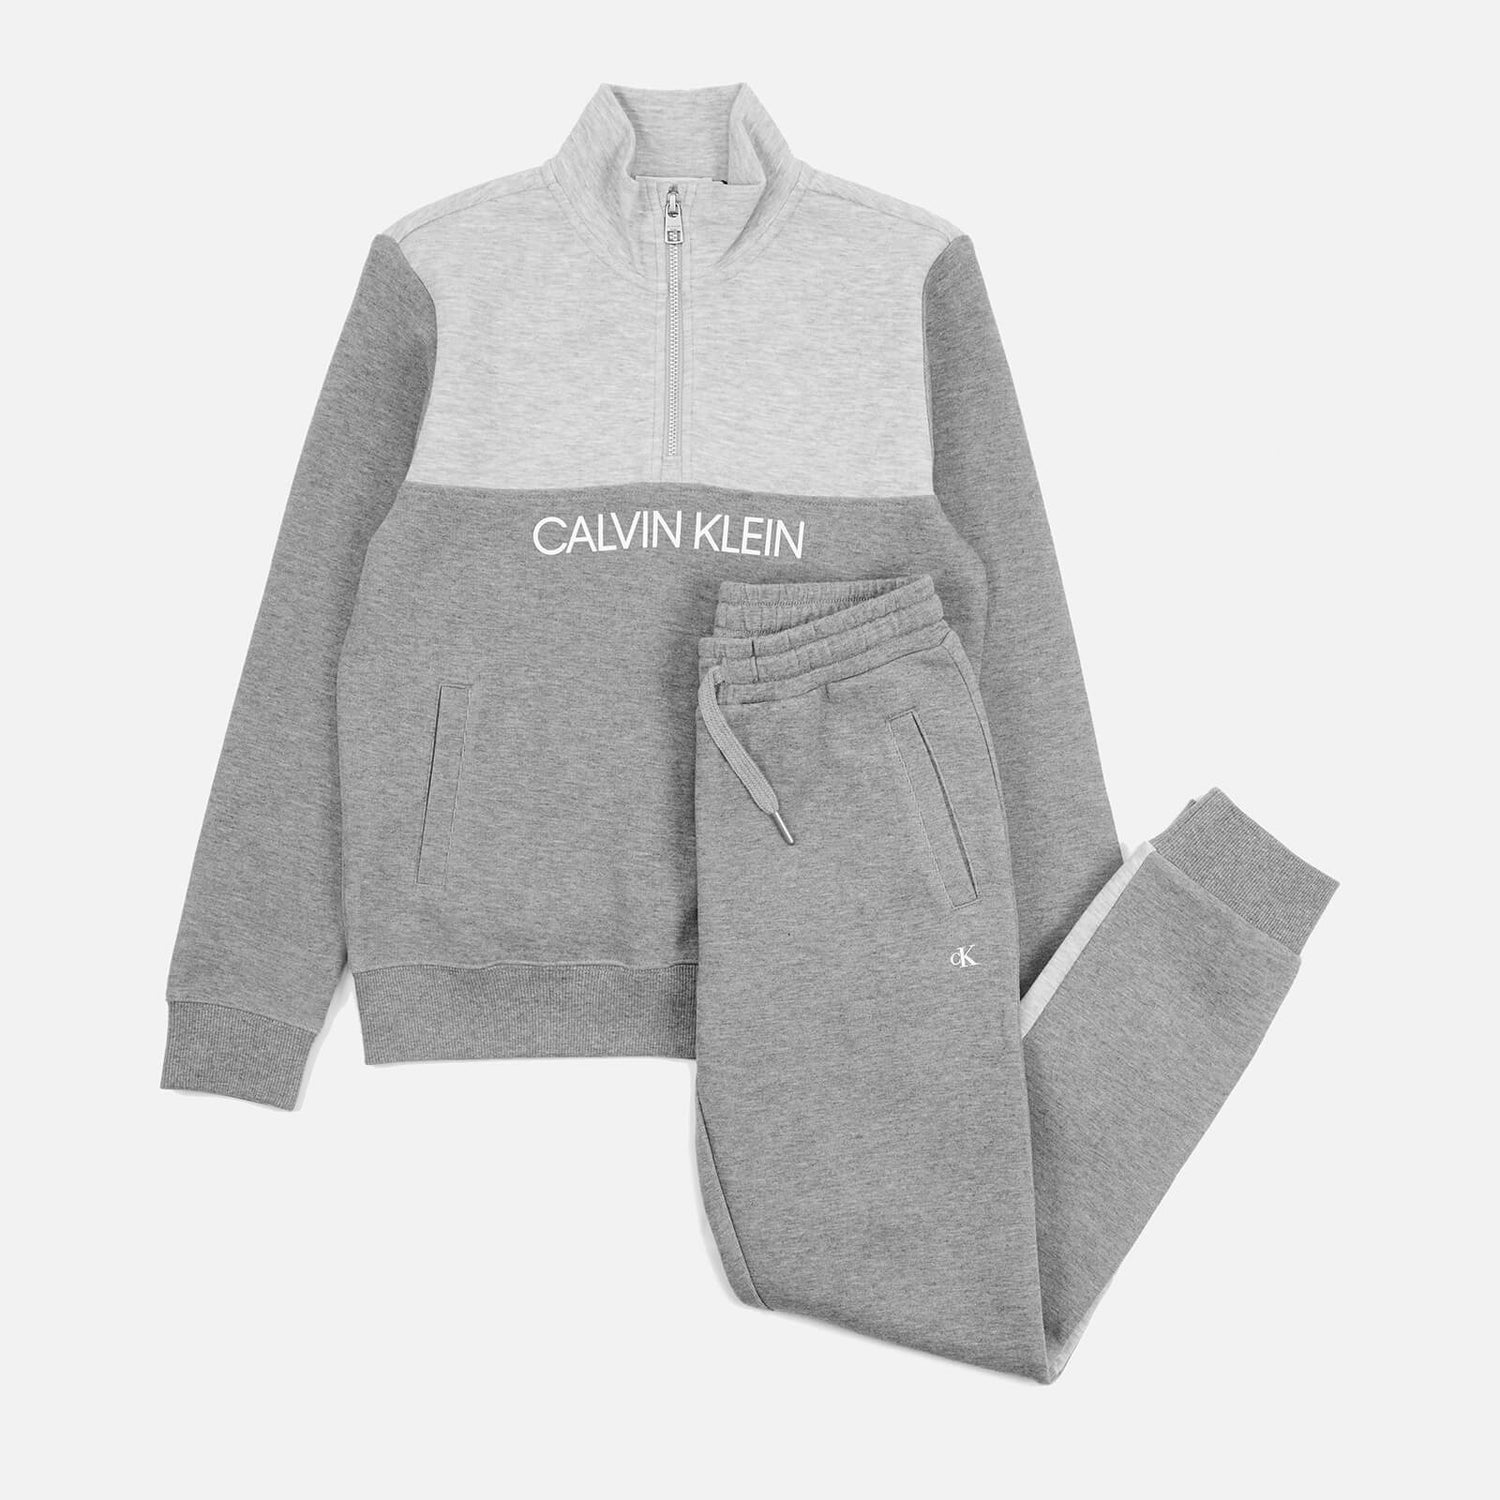 Calvin Klein Boys' Colour Block Zip-Up Sweatpants Set - Mid Grey Heather